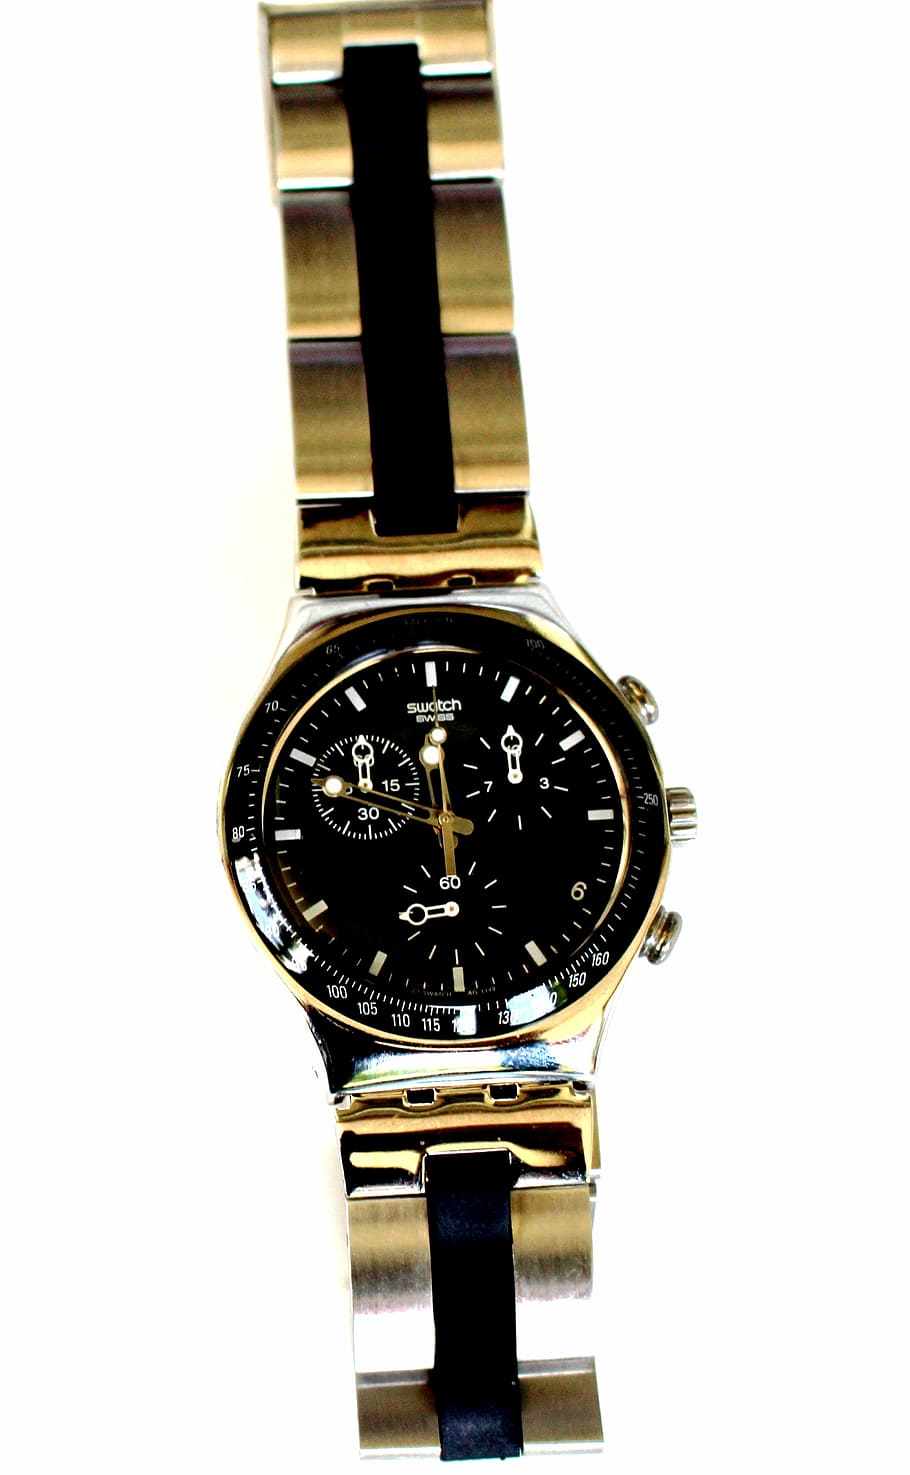 time, wrist watch, men's, swatch, swiss made, stainless steel, waterproof, watch, clock, close-up